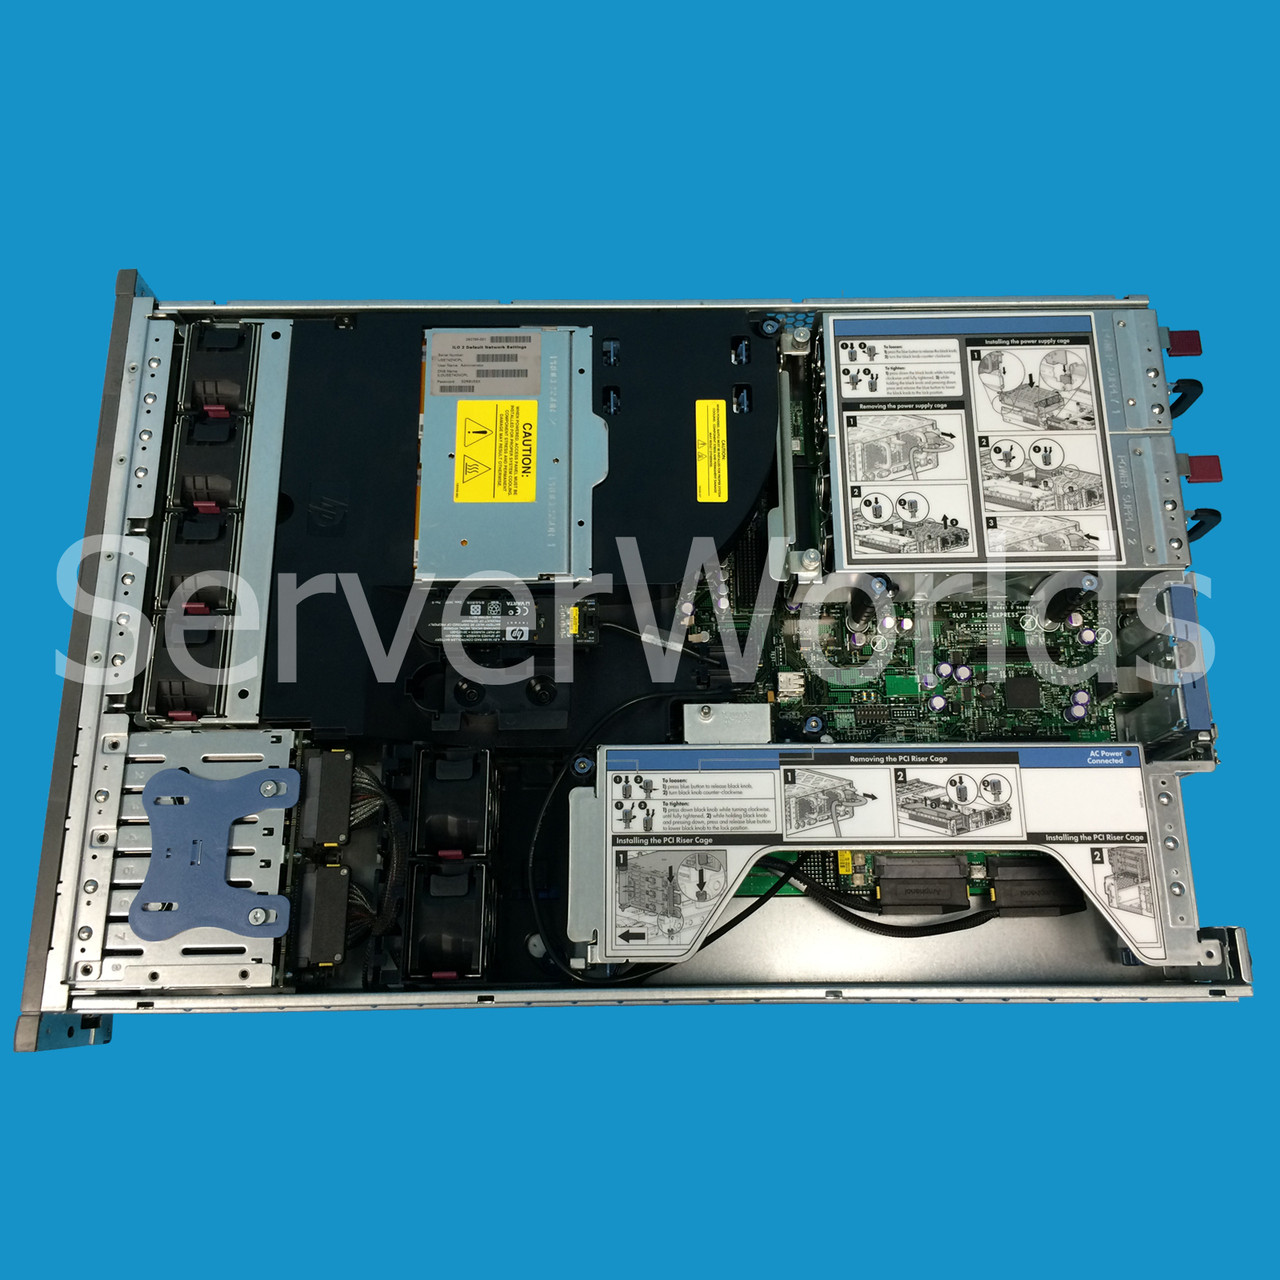 Refurbished HP DL380 G5 QC E5430 2.66Ghz 2GB 470064-873